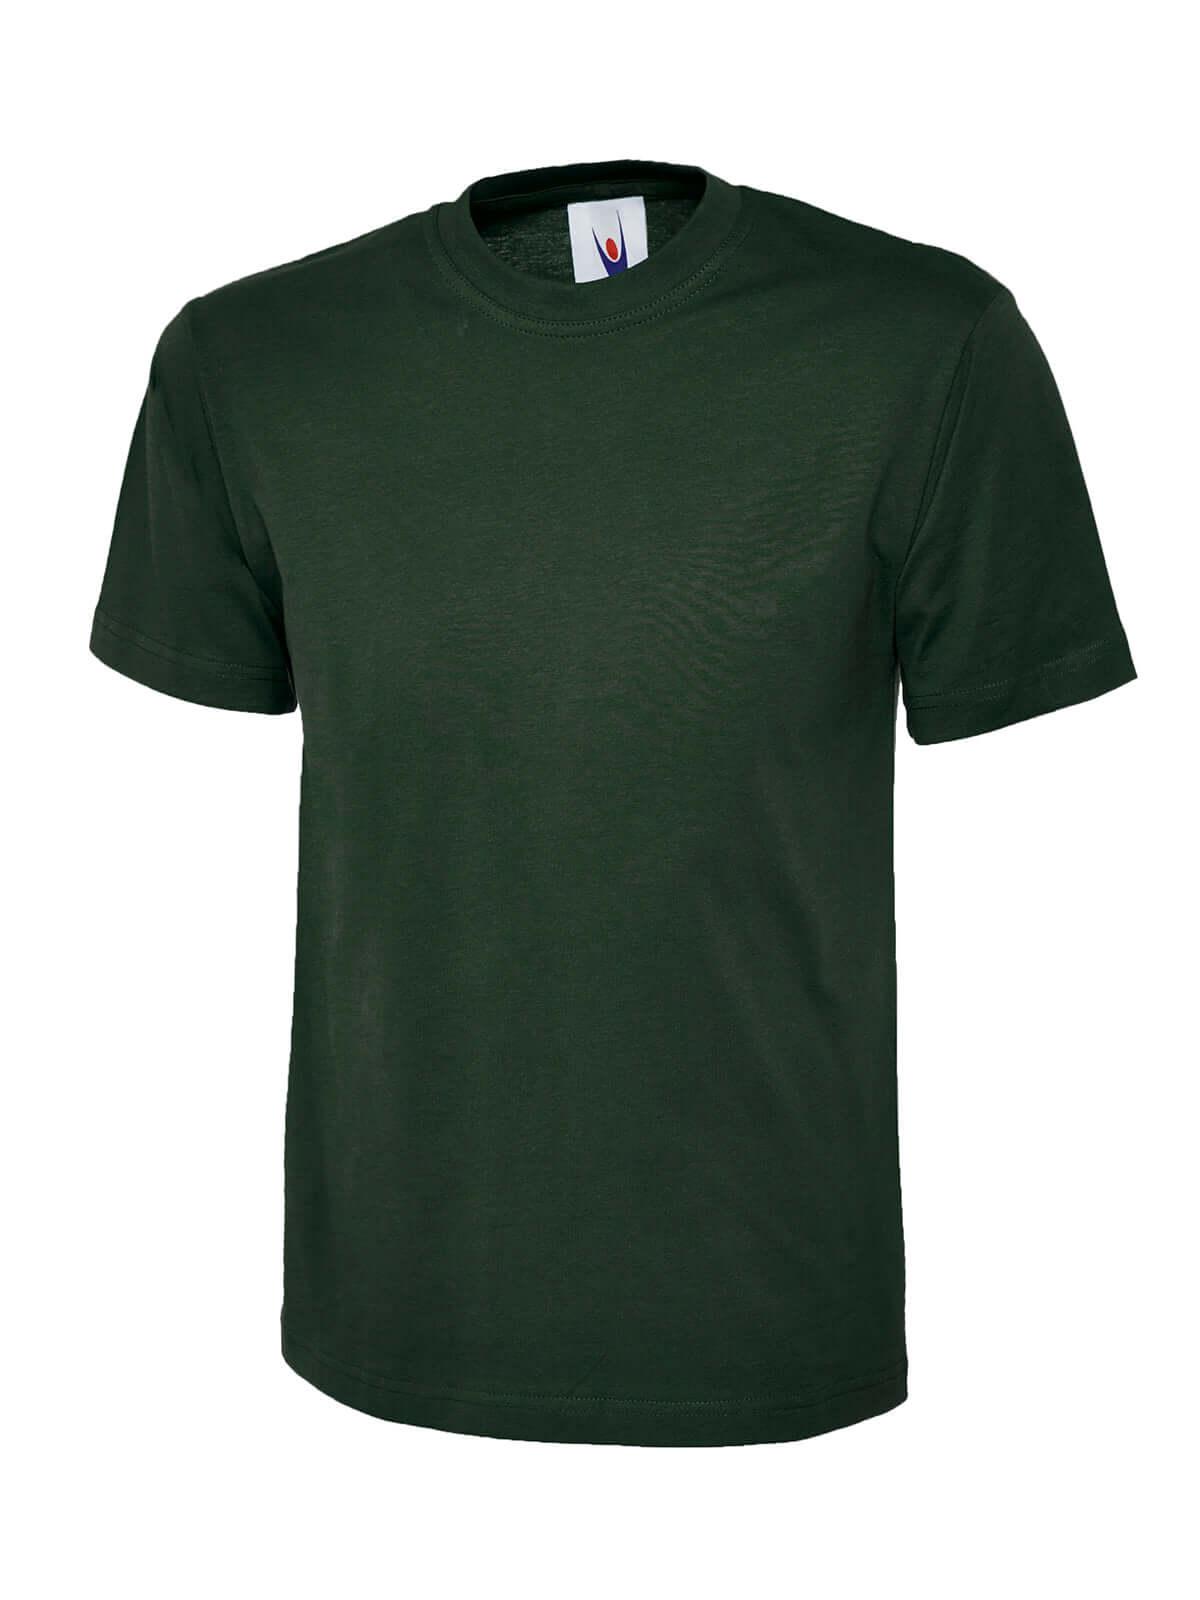 Pegasus Uniform Classic T-shirt - Bottle Green